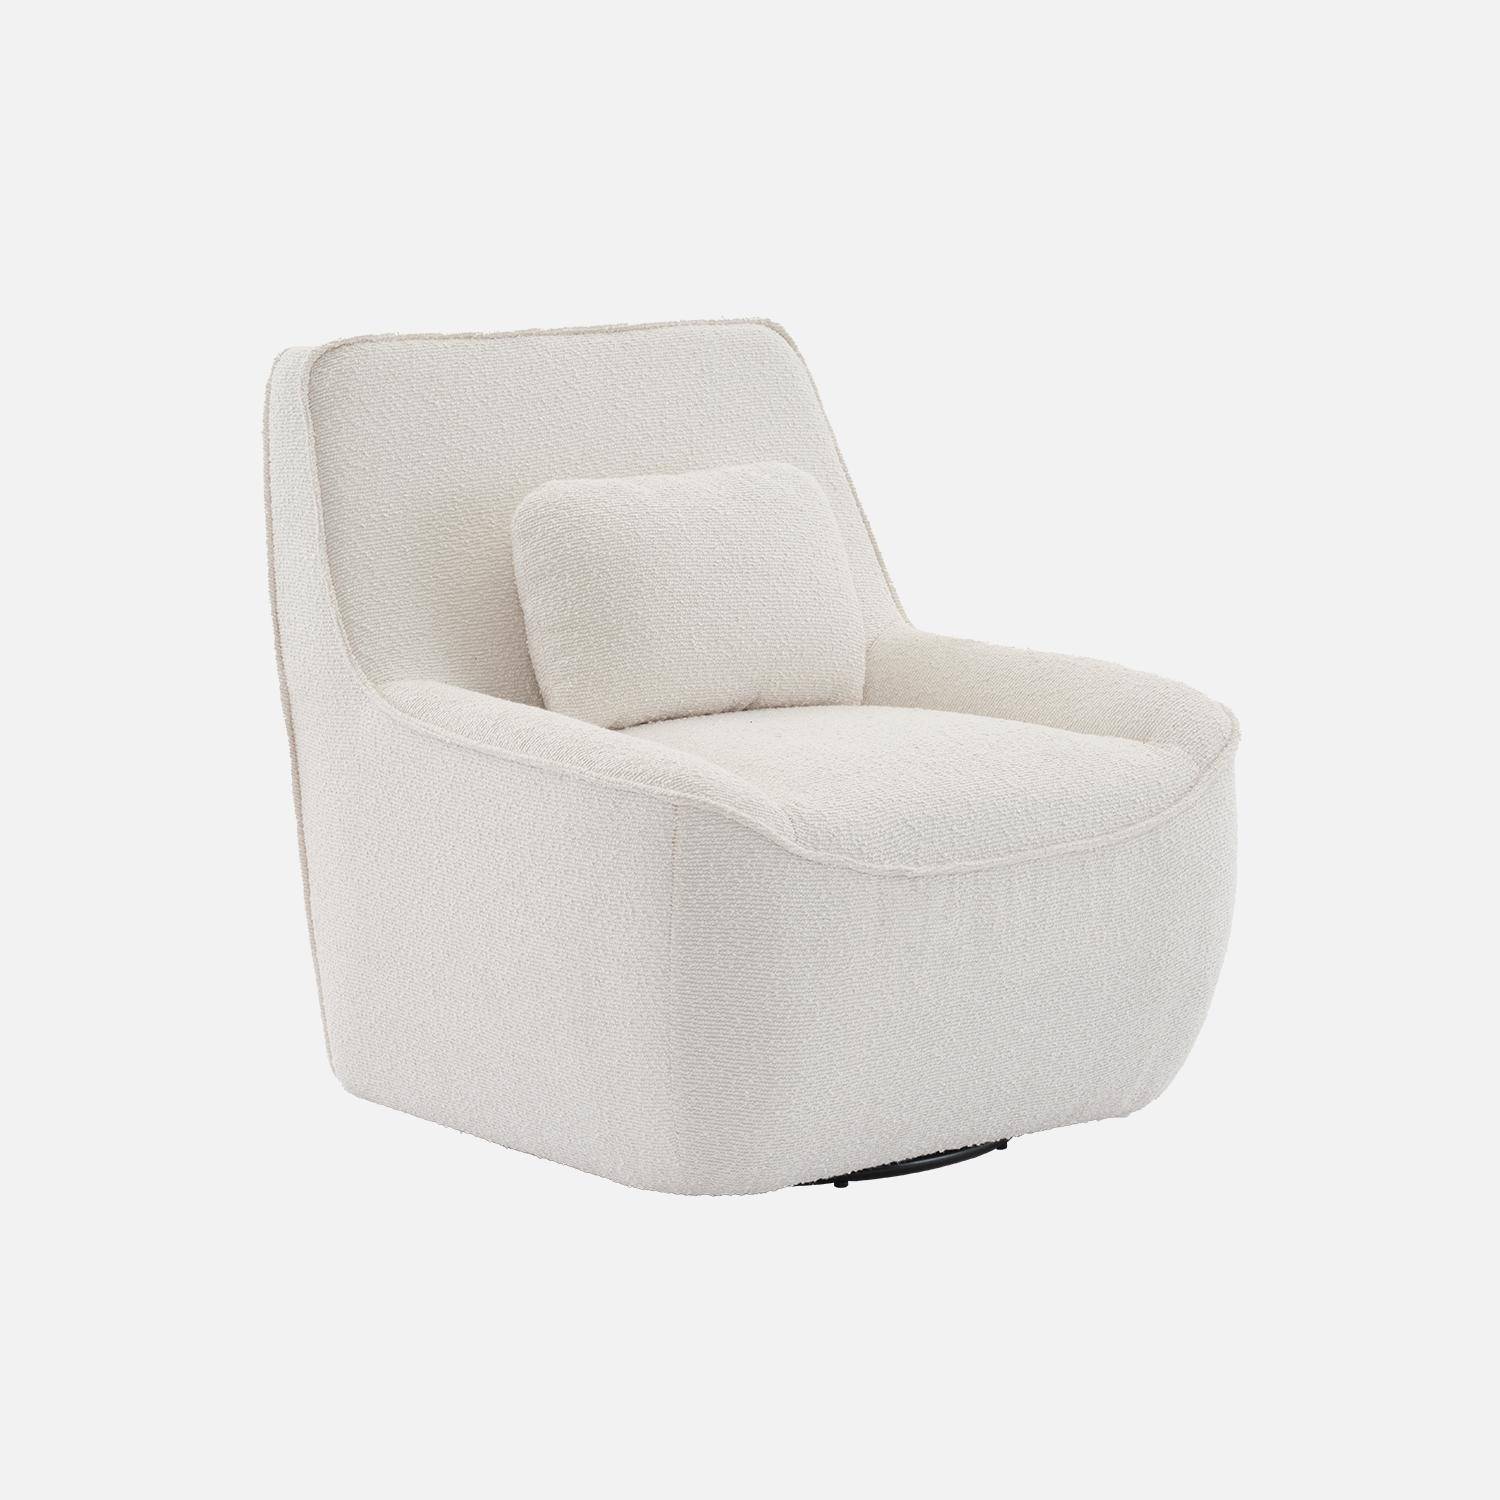 360° draaibare fauteuil in wit bouclé afneembaar kussen, Lounge, B 83 x D 83 x H 83cm,sweeek,Photo4